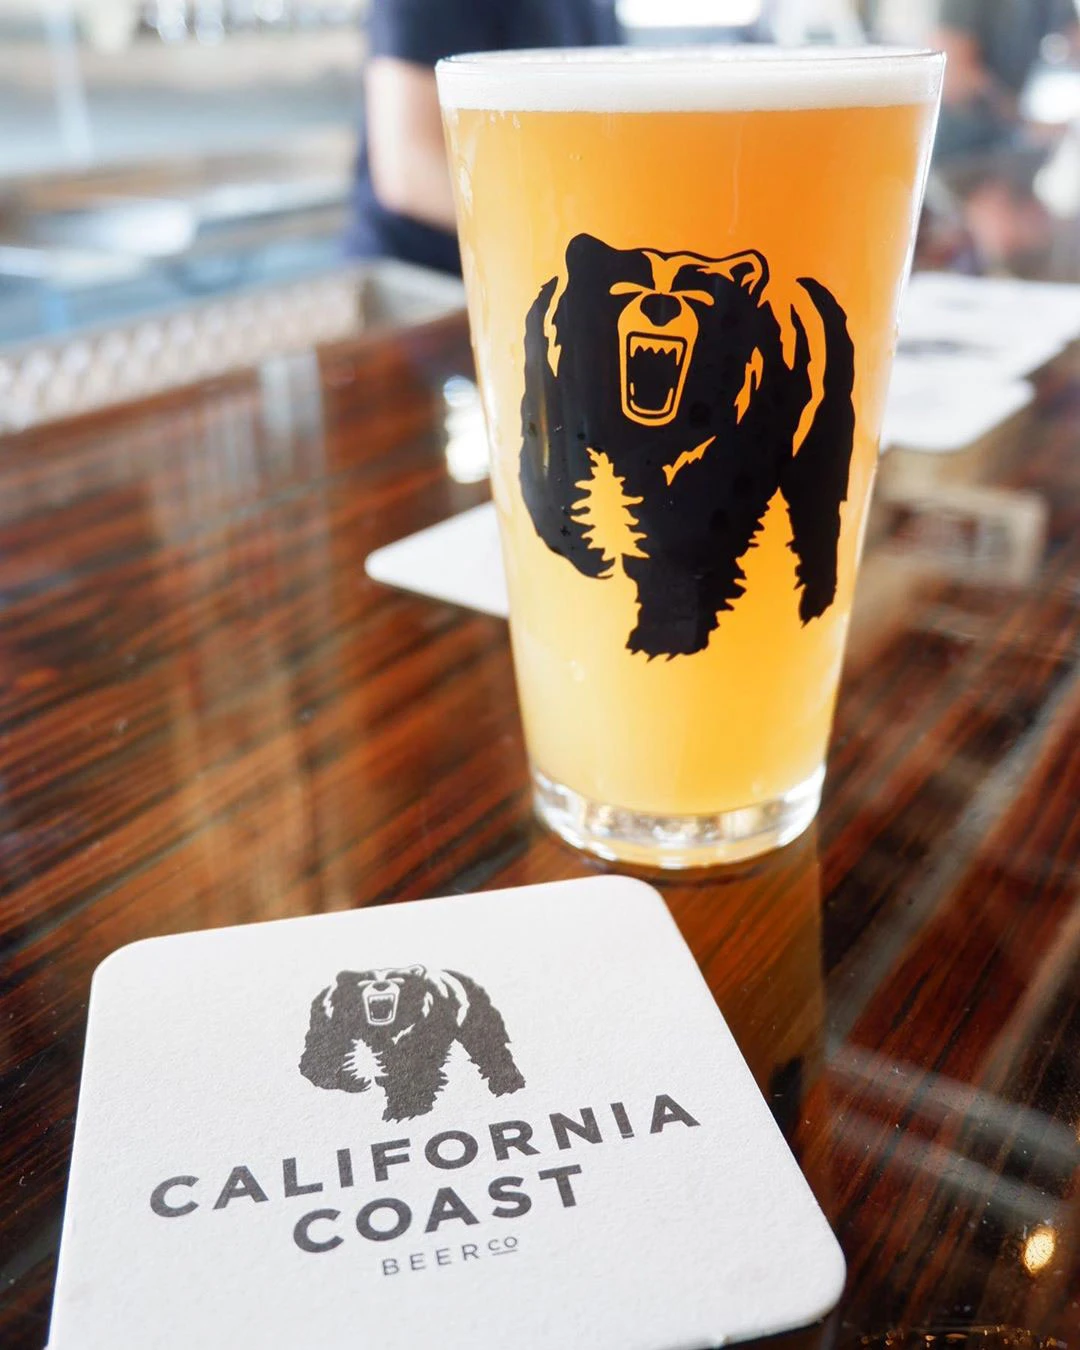 California Coast Beer Co. pint glass and coaster